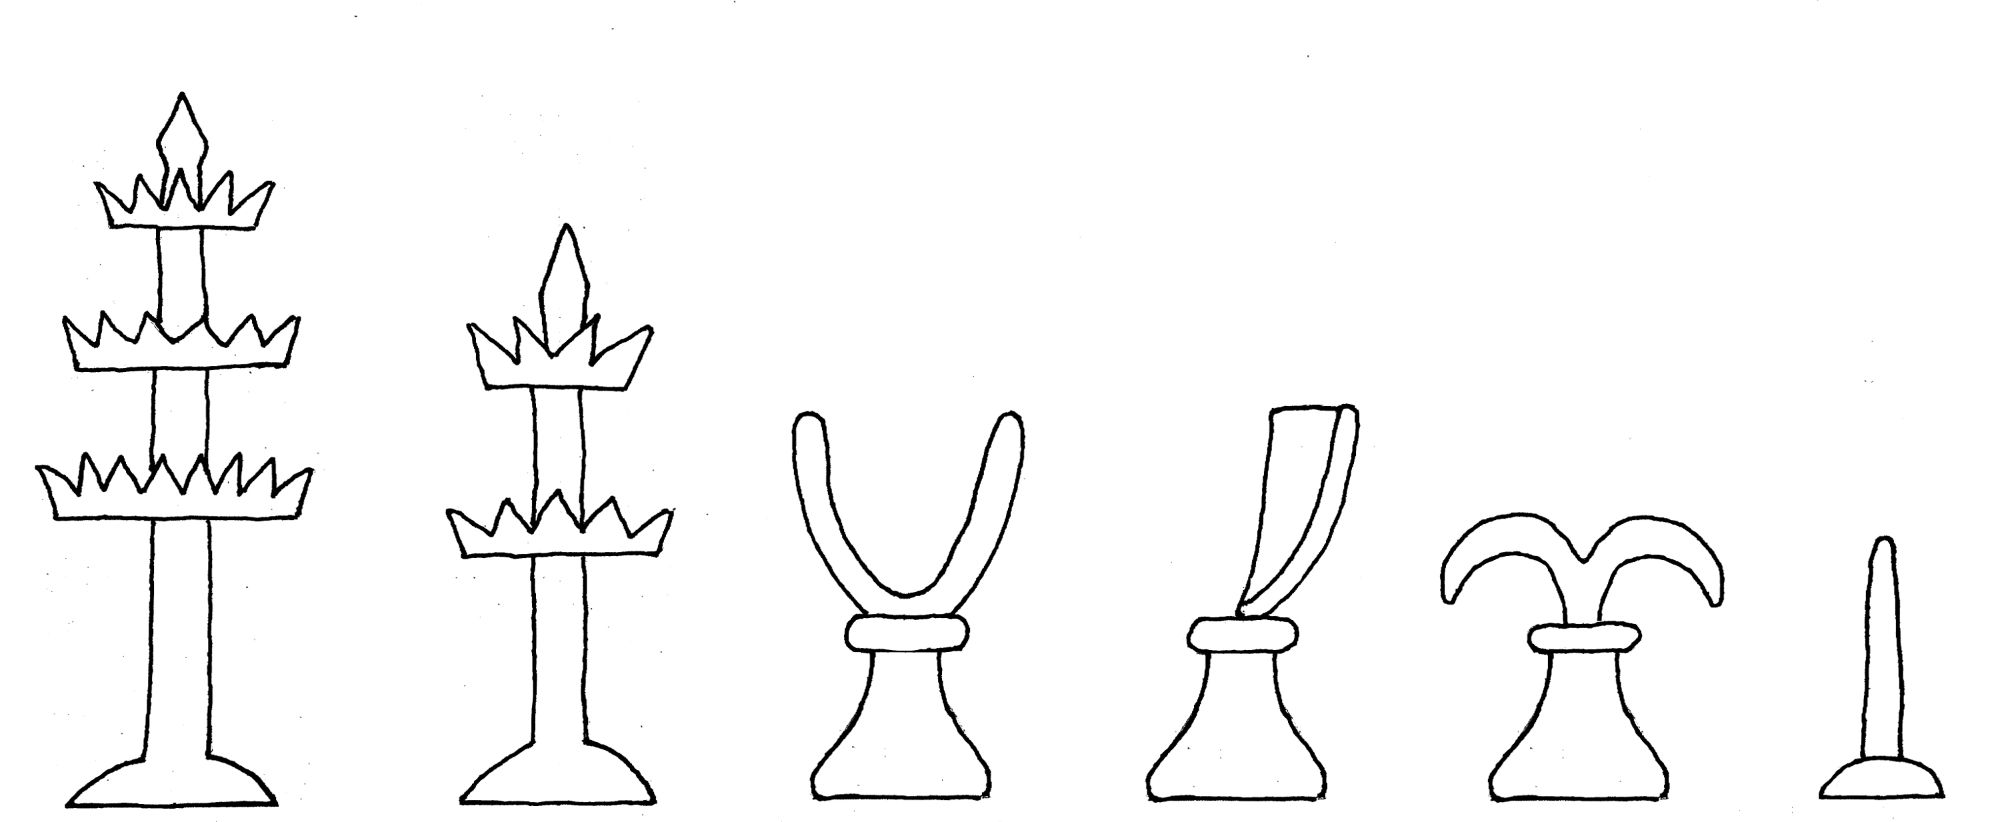 Albrecht and Anna chess set interpretive diagram